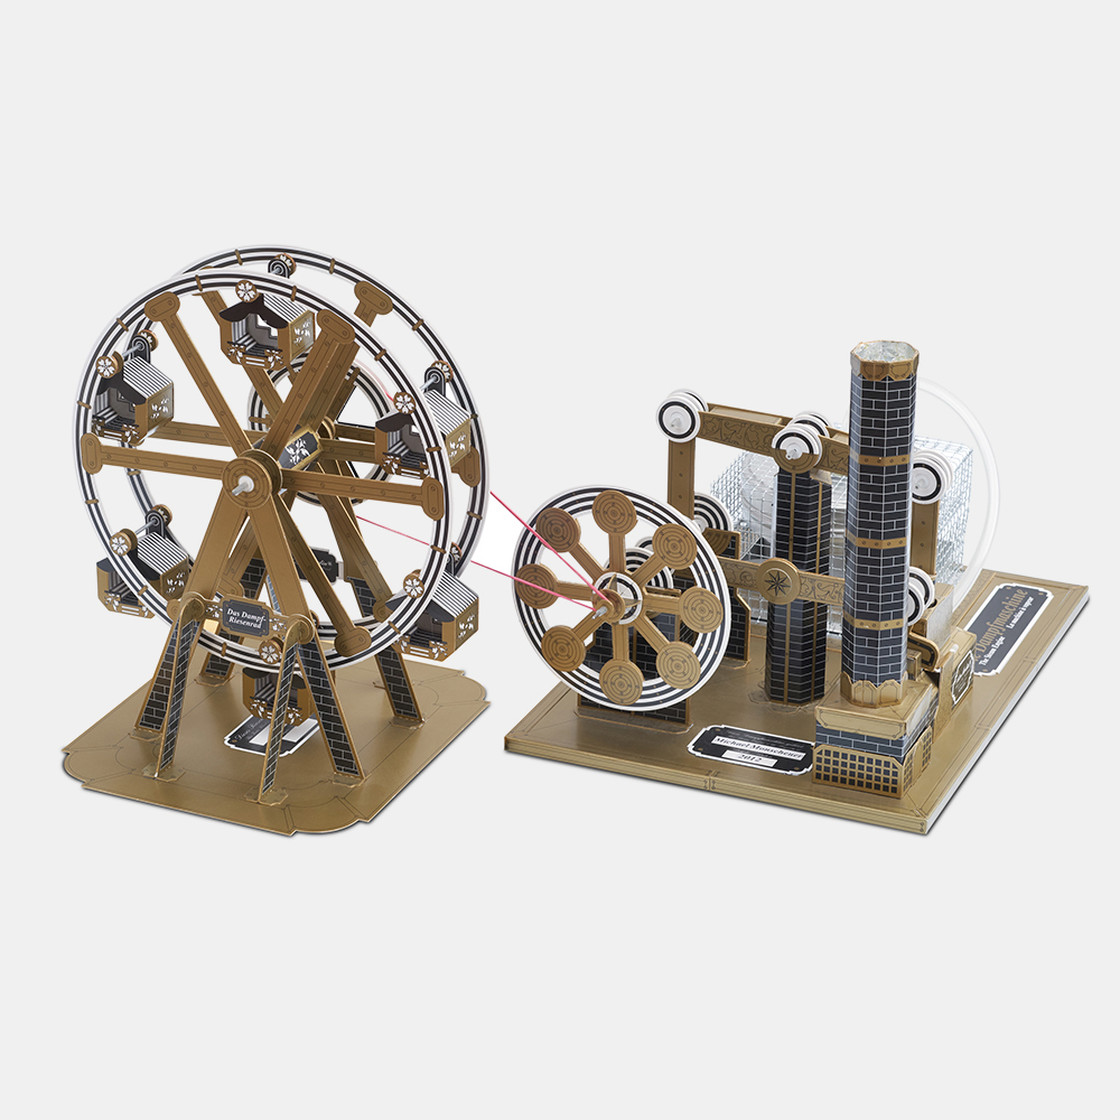 The Ferris Wheel - AsdtroMedia